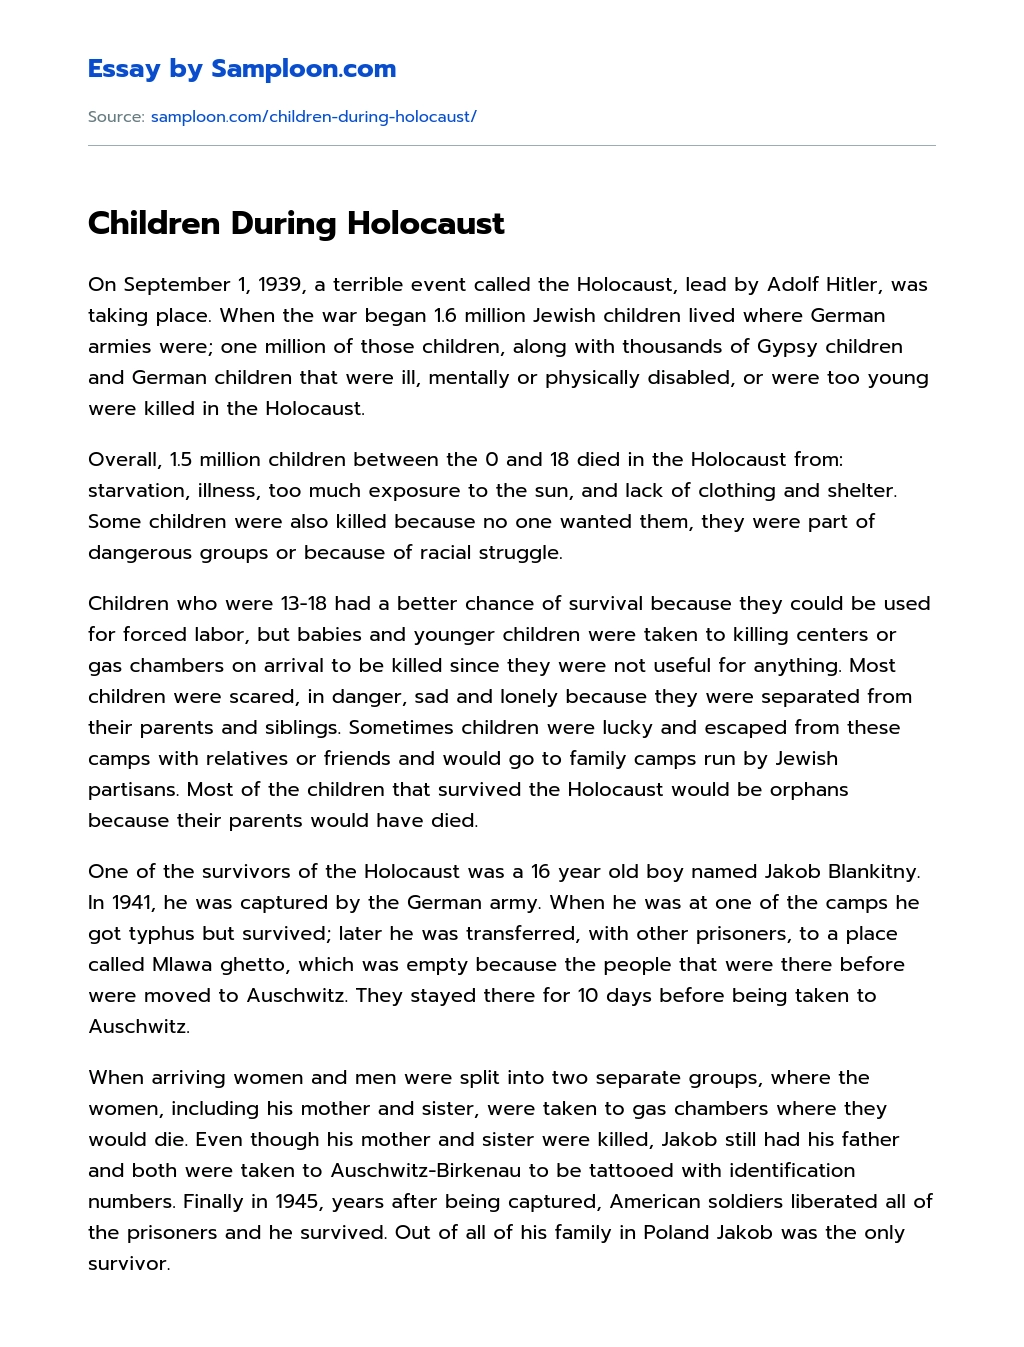 Children During Holocaust essay